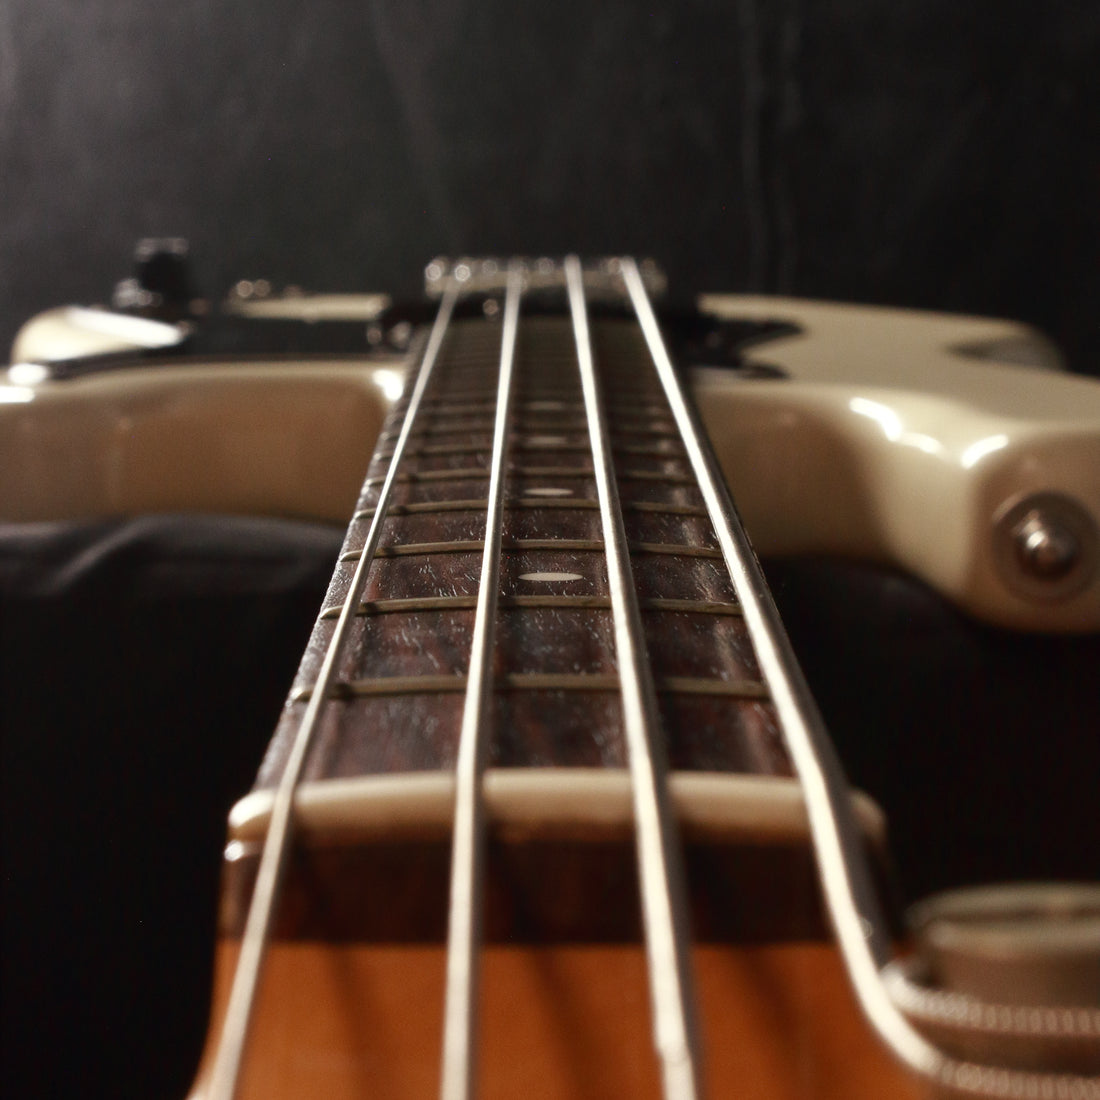 Fender Japan '70 Precision Bass PB70-70US Olympic White 1998